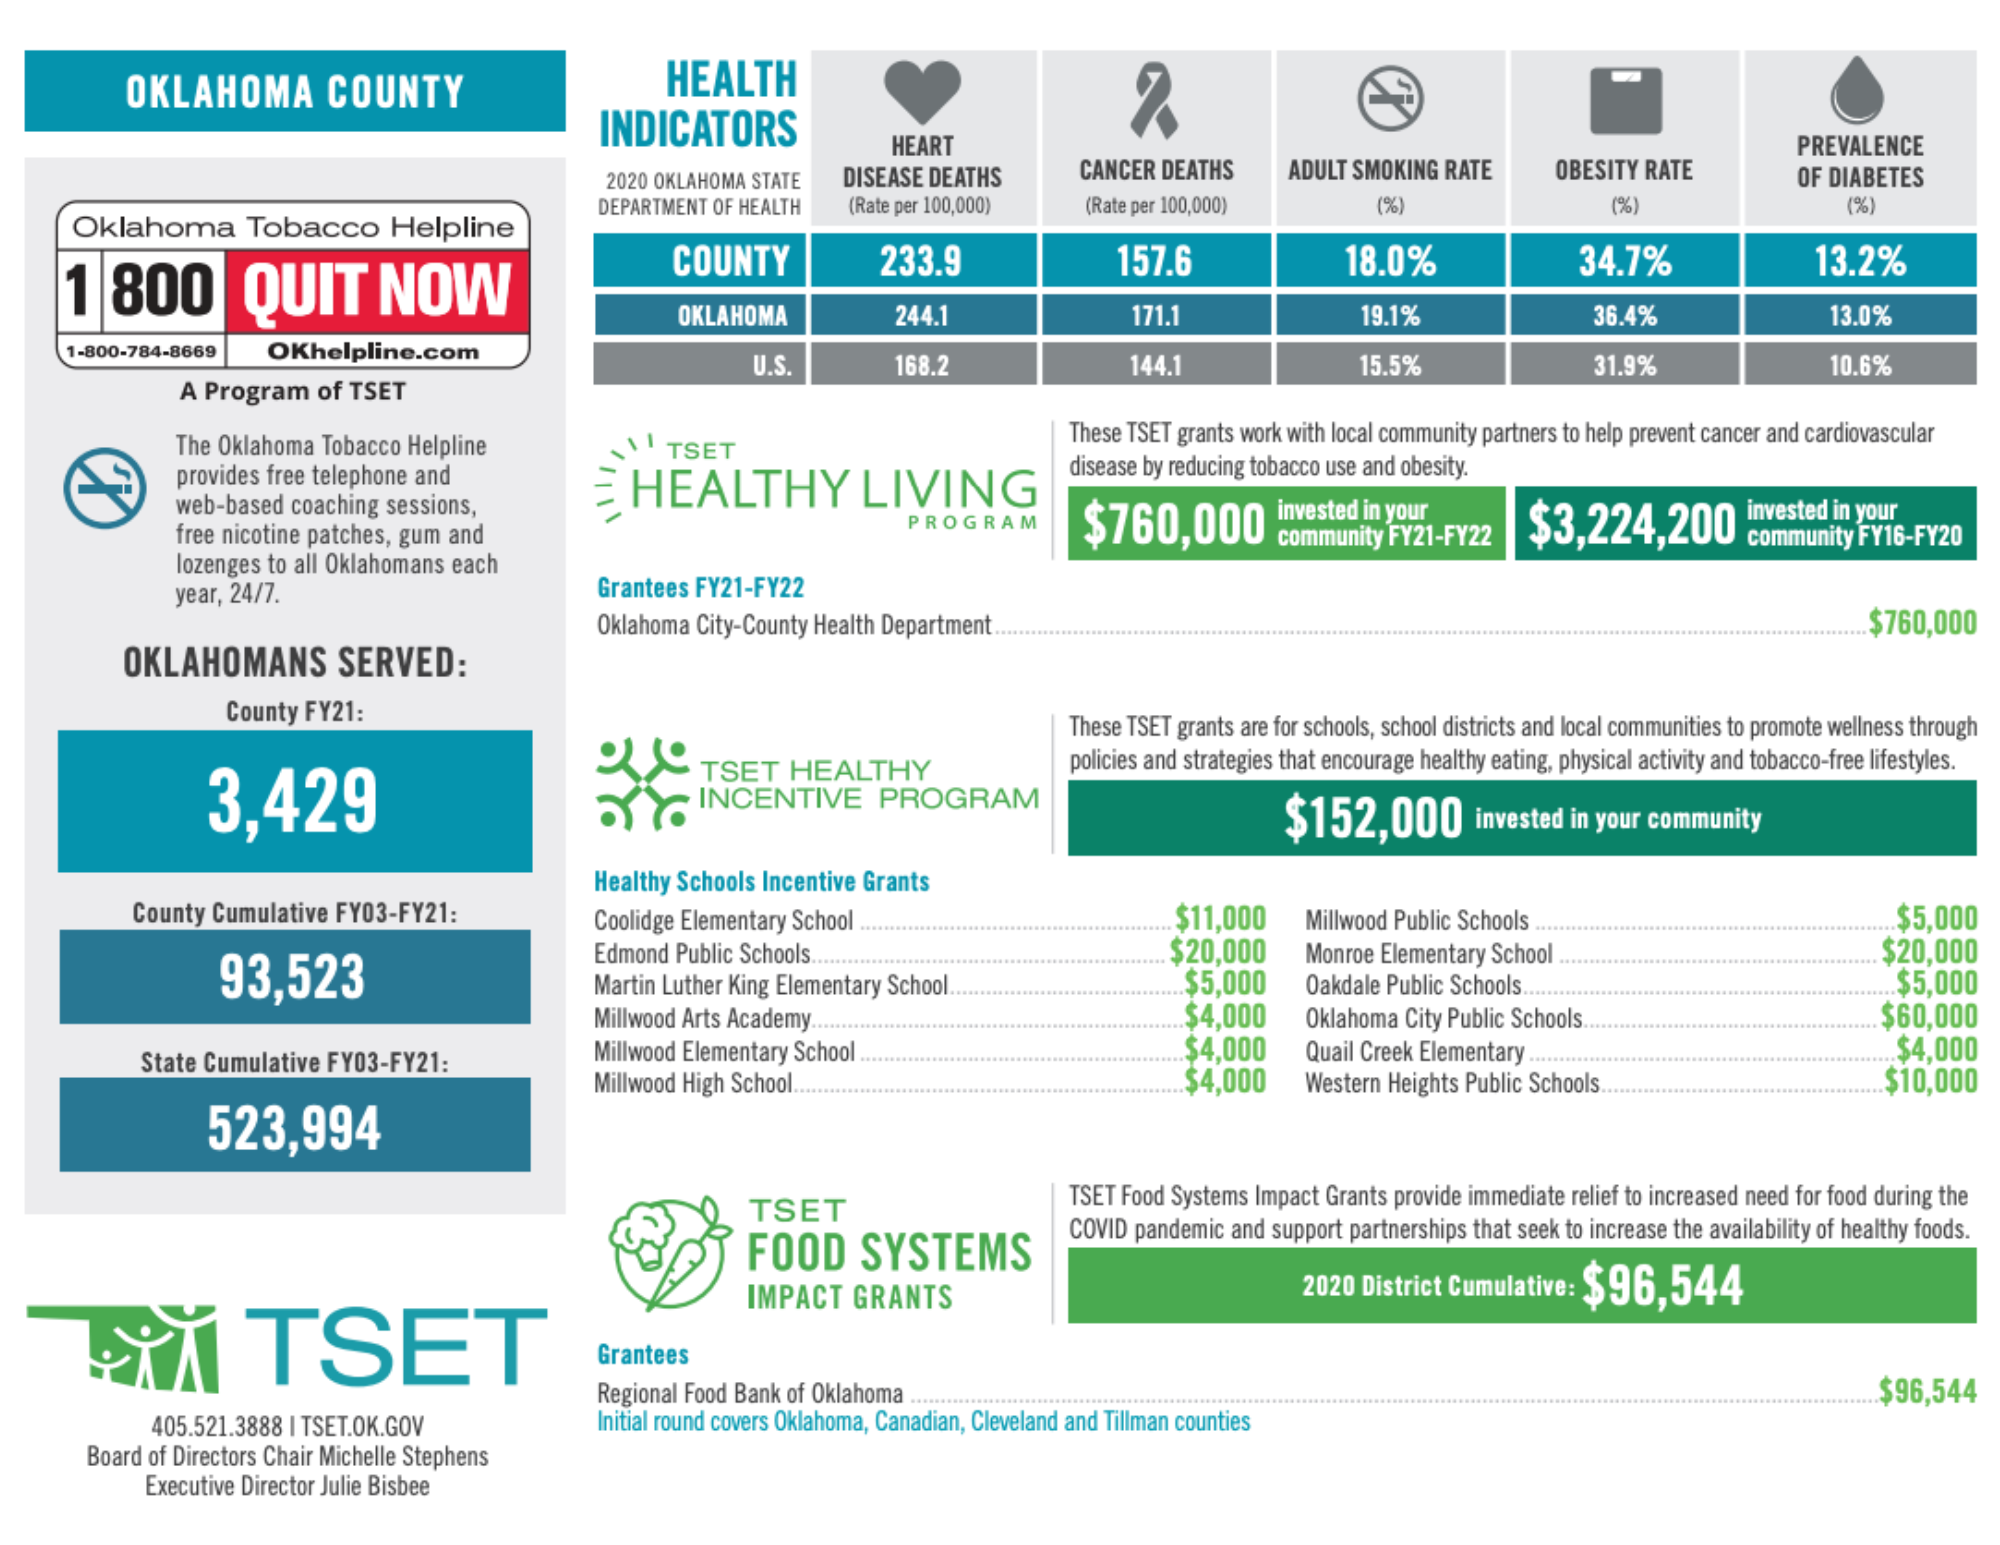 TSET's Local Impact Report for Oklahoma County.